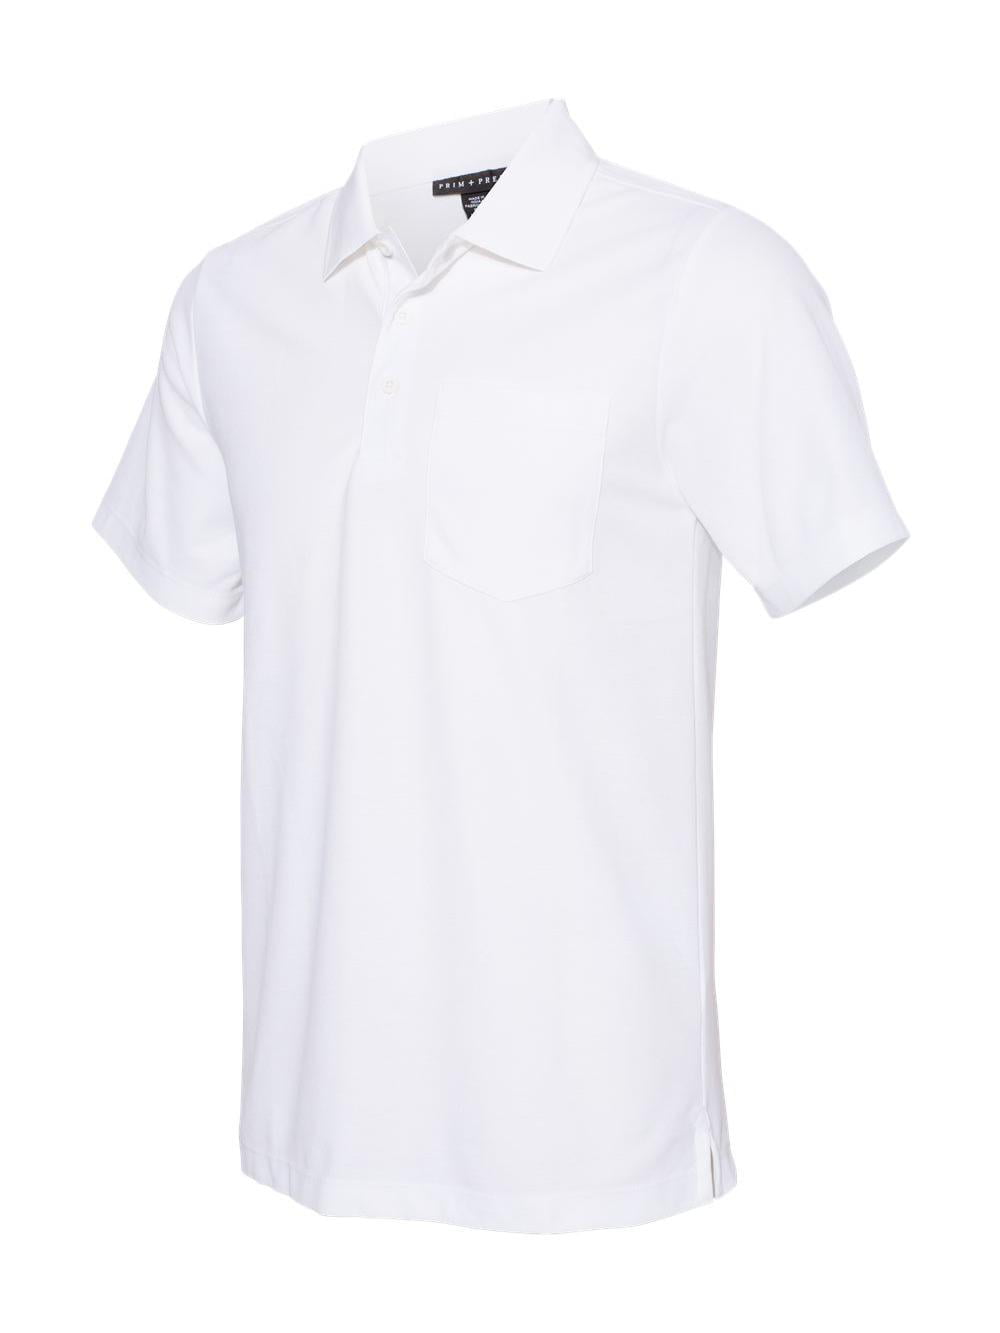 Palmland Classic 2 Pocket Solid Banded Bottom Polo Shirt Sizes Medium-4XLT